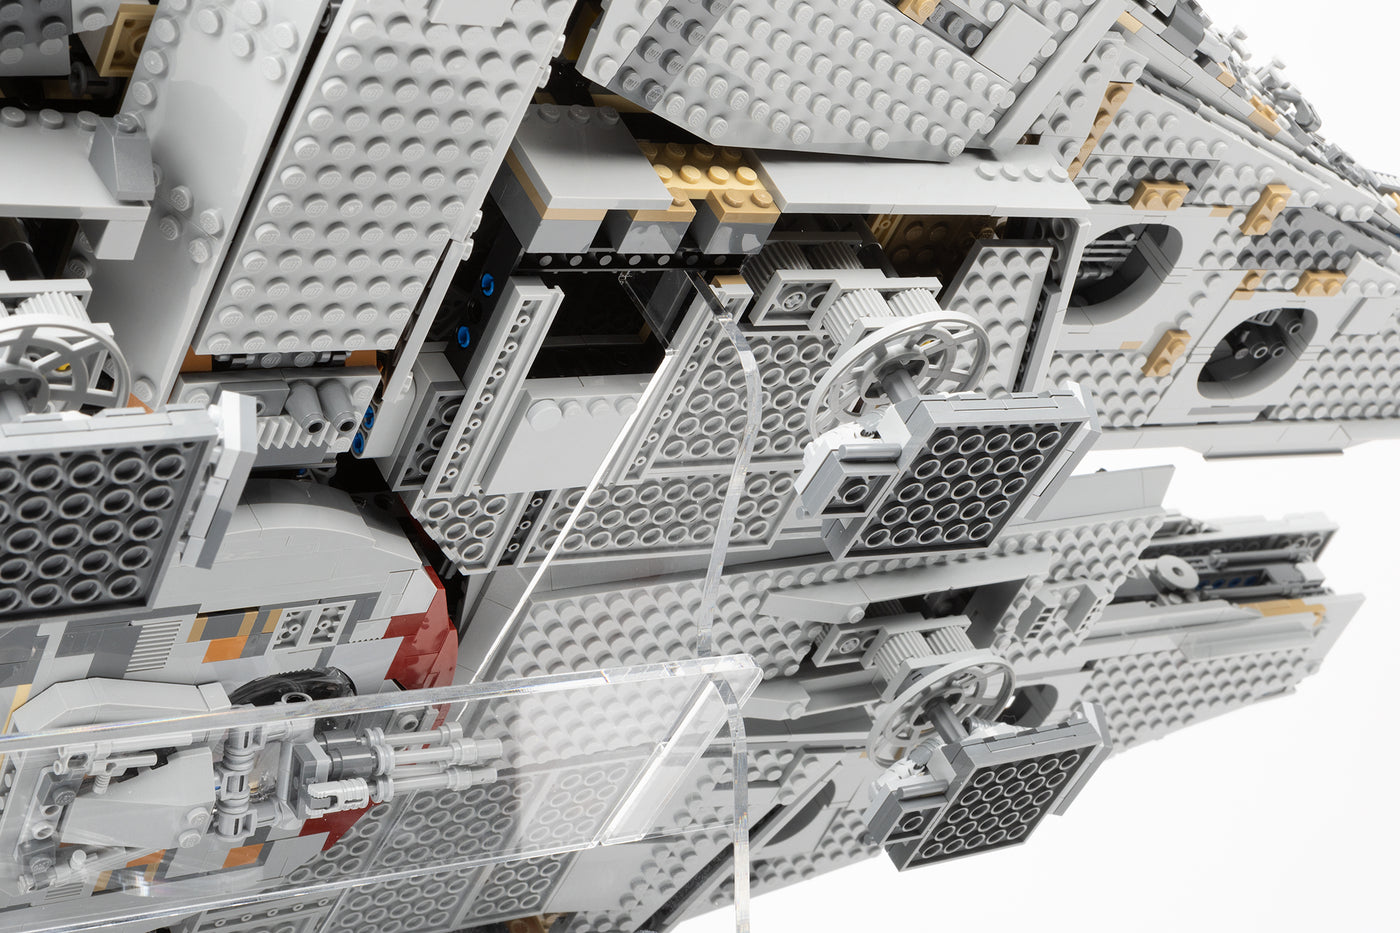 LEGO® Star Wars™ Display Stand - Millennium Falcon (75192) Edition